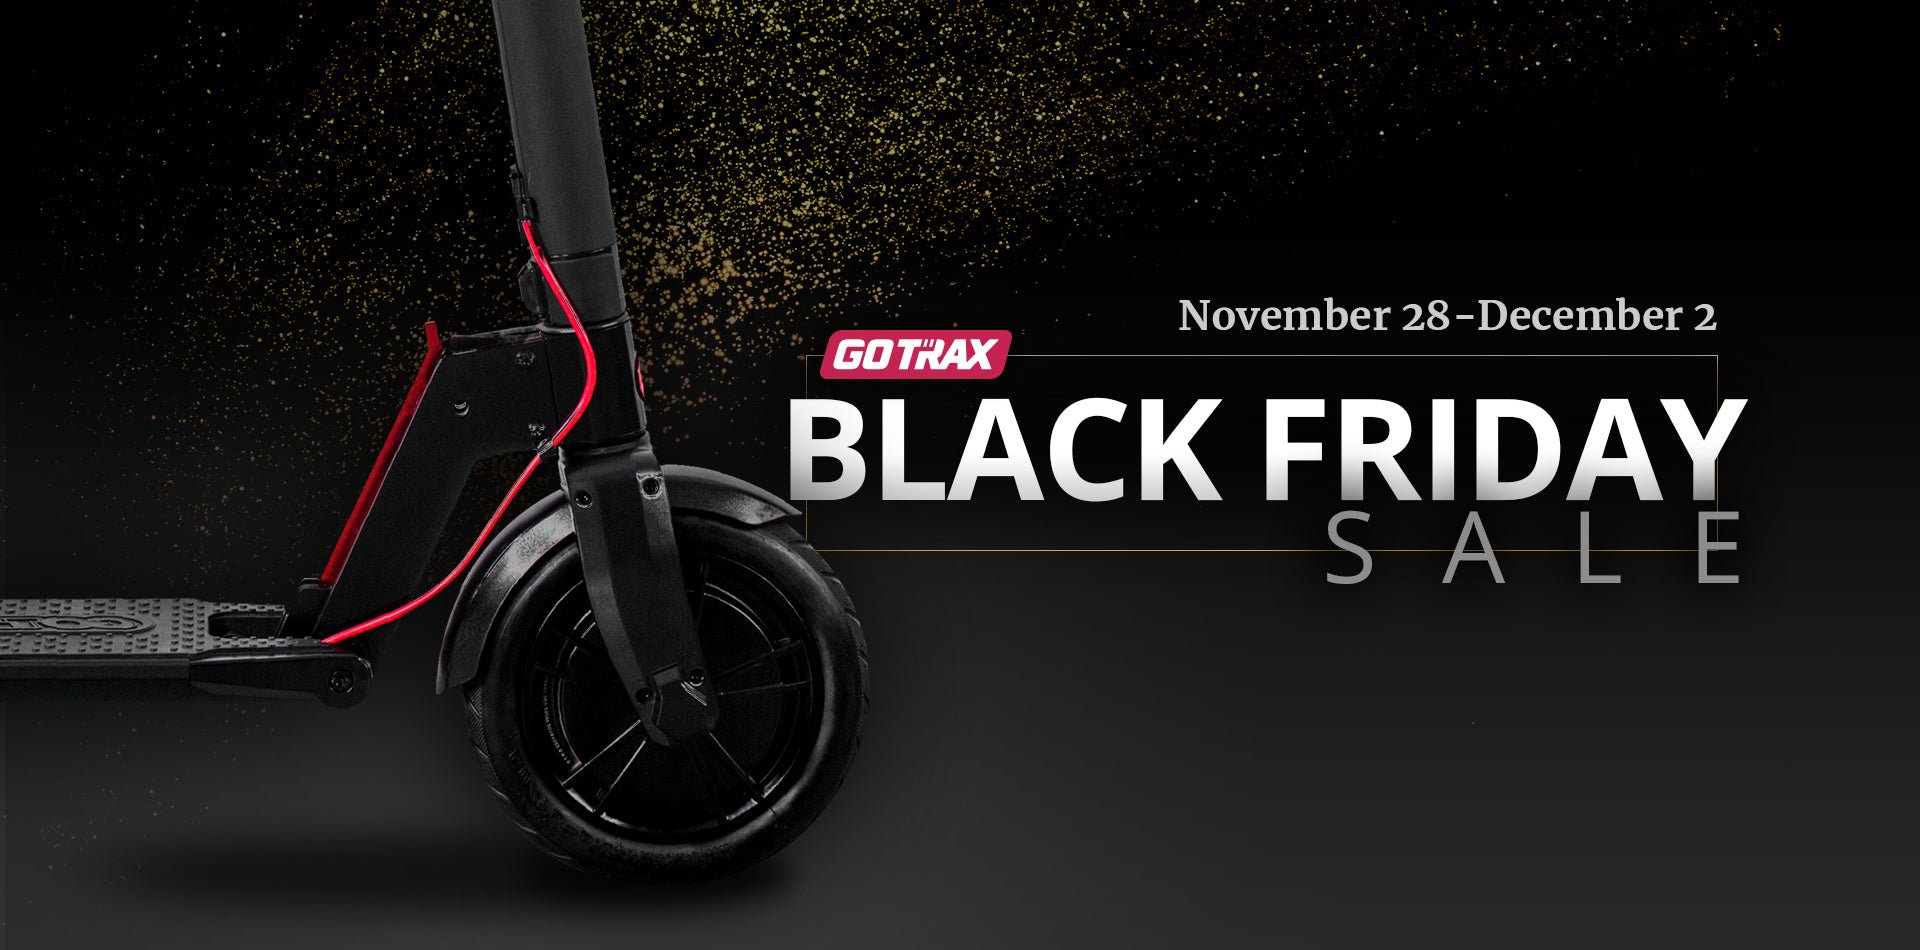 GOTRAX Black Friday/Cyber Monday Sale 2020 - GOTRAX